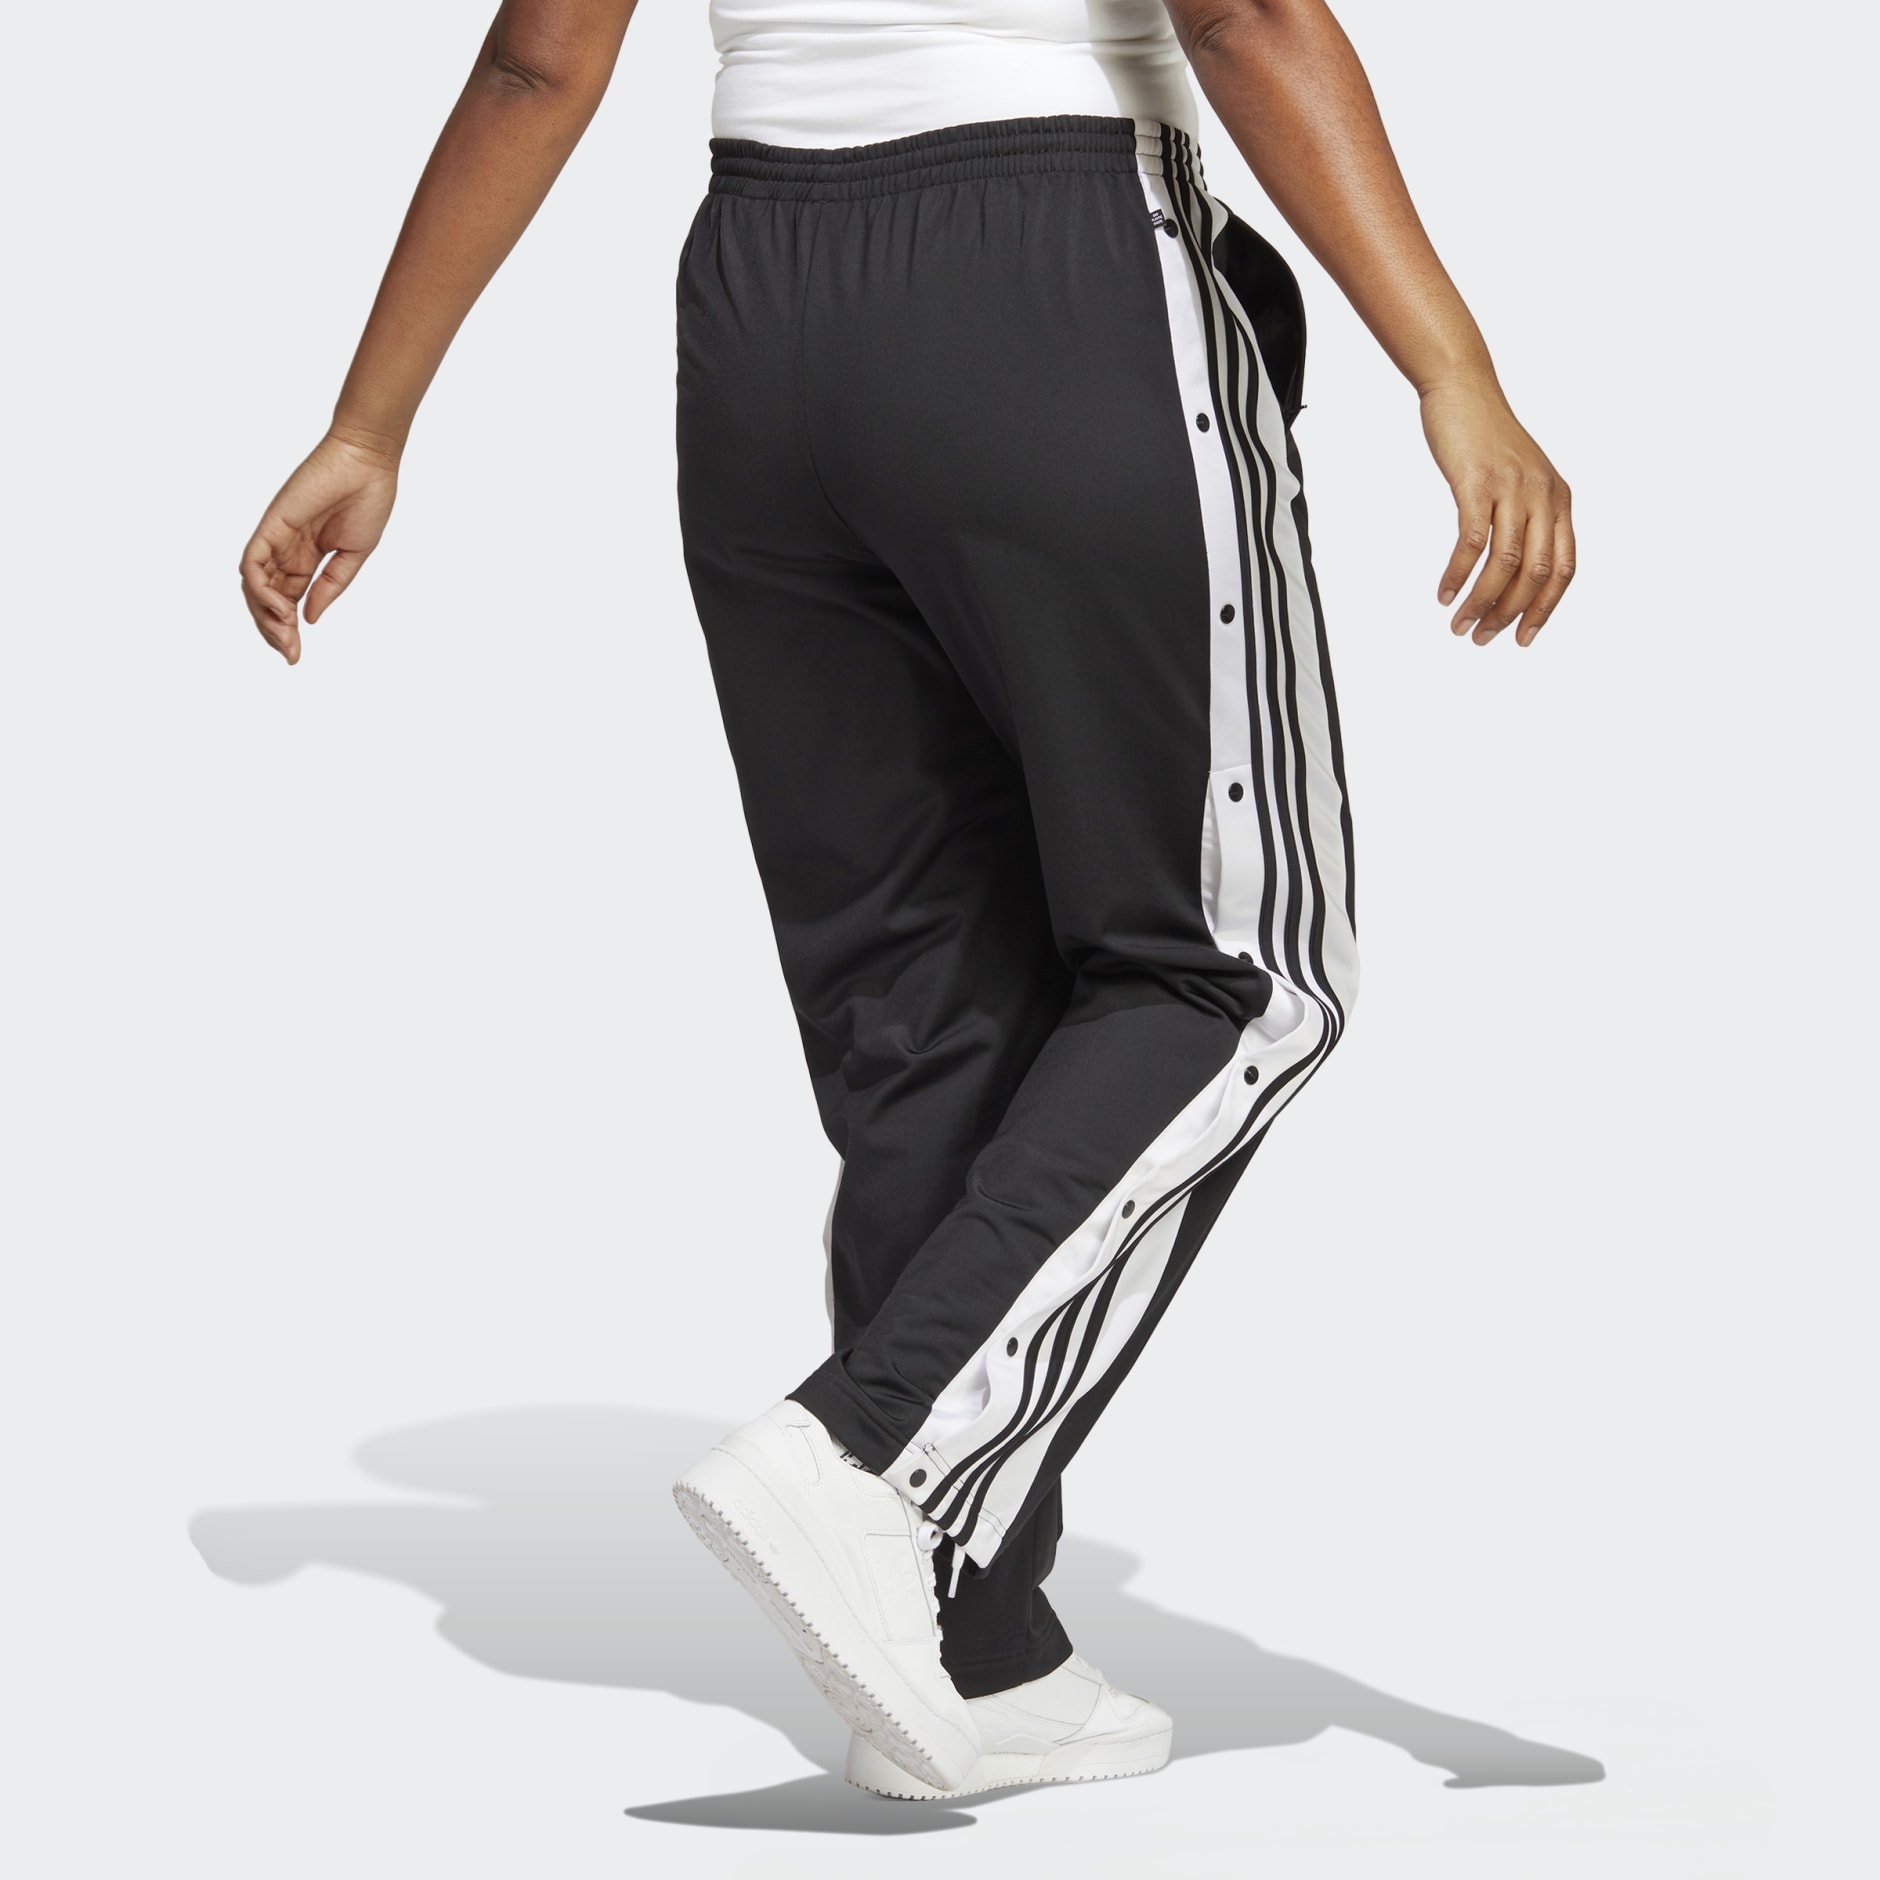 adidas Originals Adibreak Snap Track Pant  Adidas track pants outfit,  Adidas originals outfit, Track pants outfit